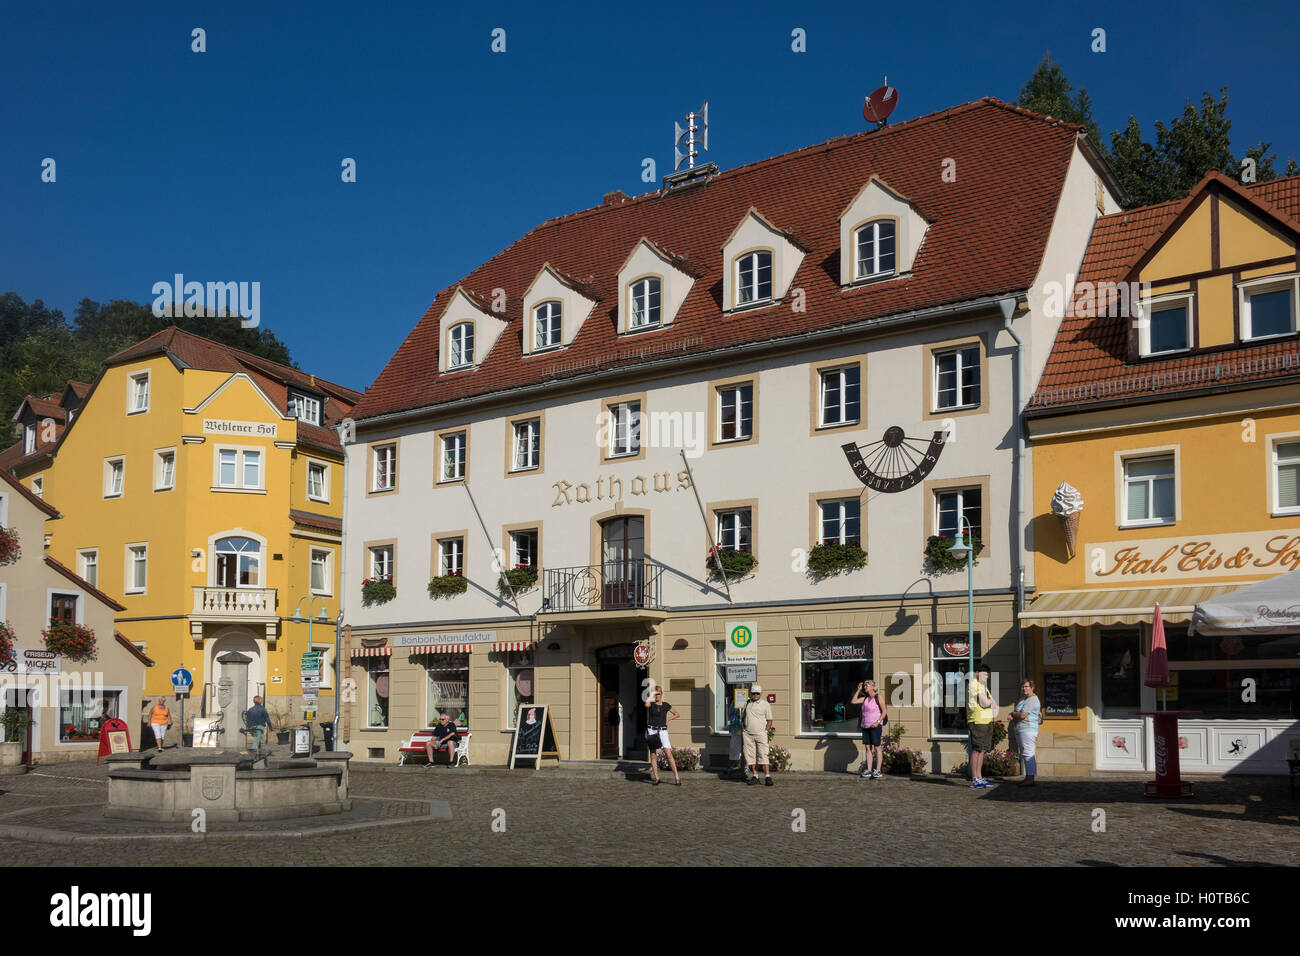 Germany, Saxony, Stadt Wehlen, Rathaus & main square Stock Photo